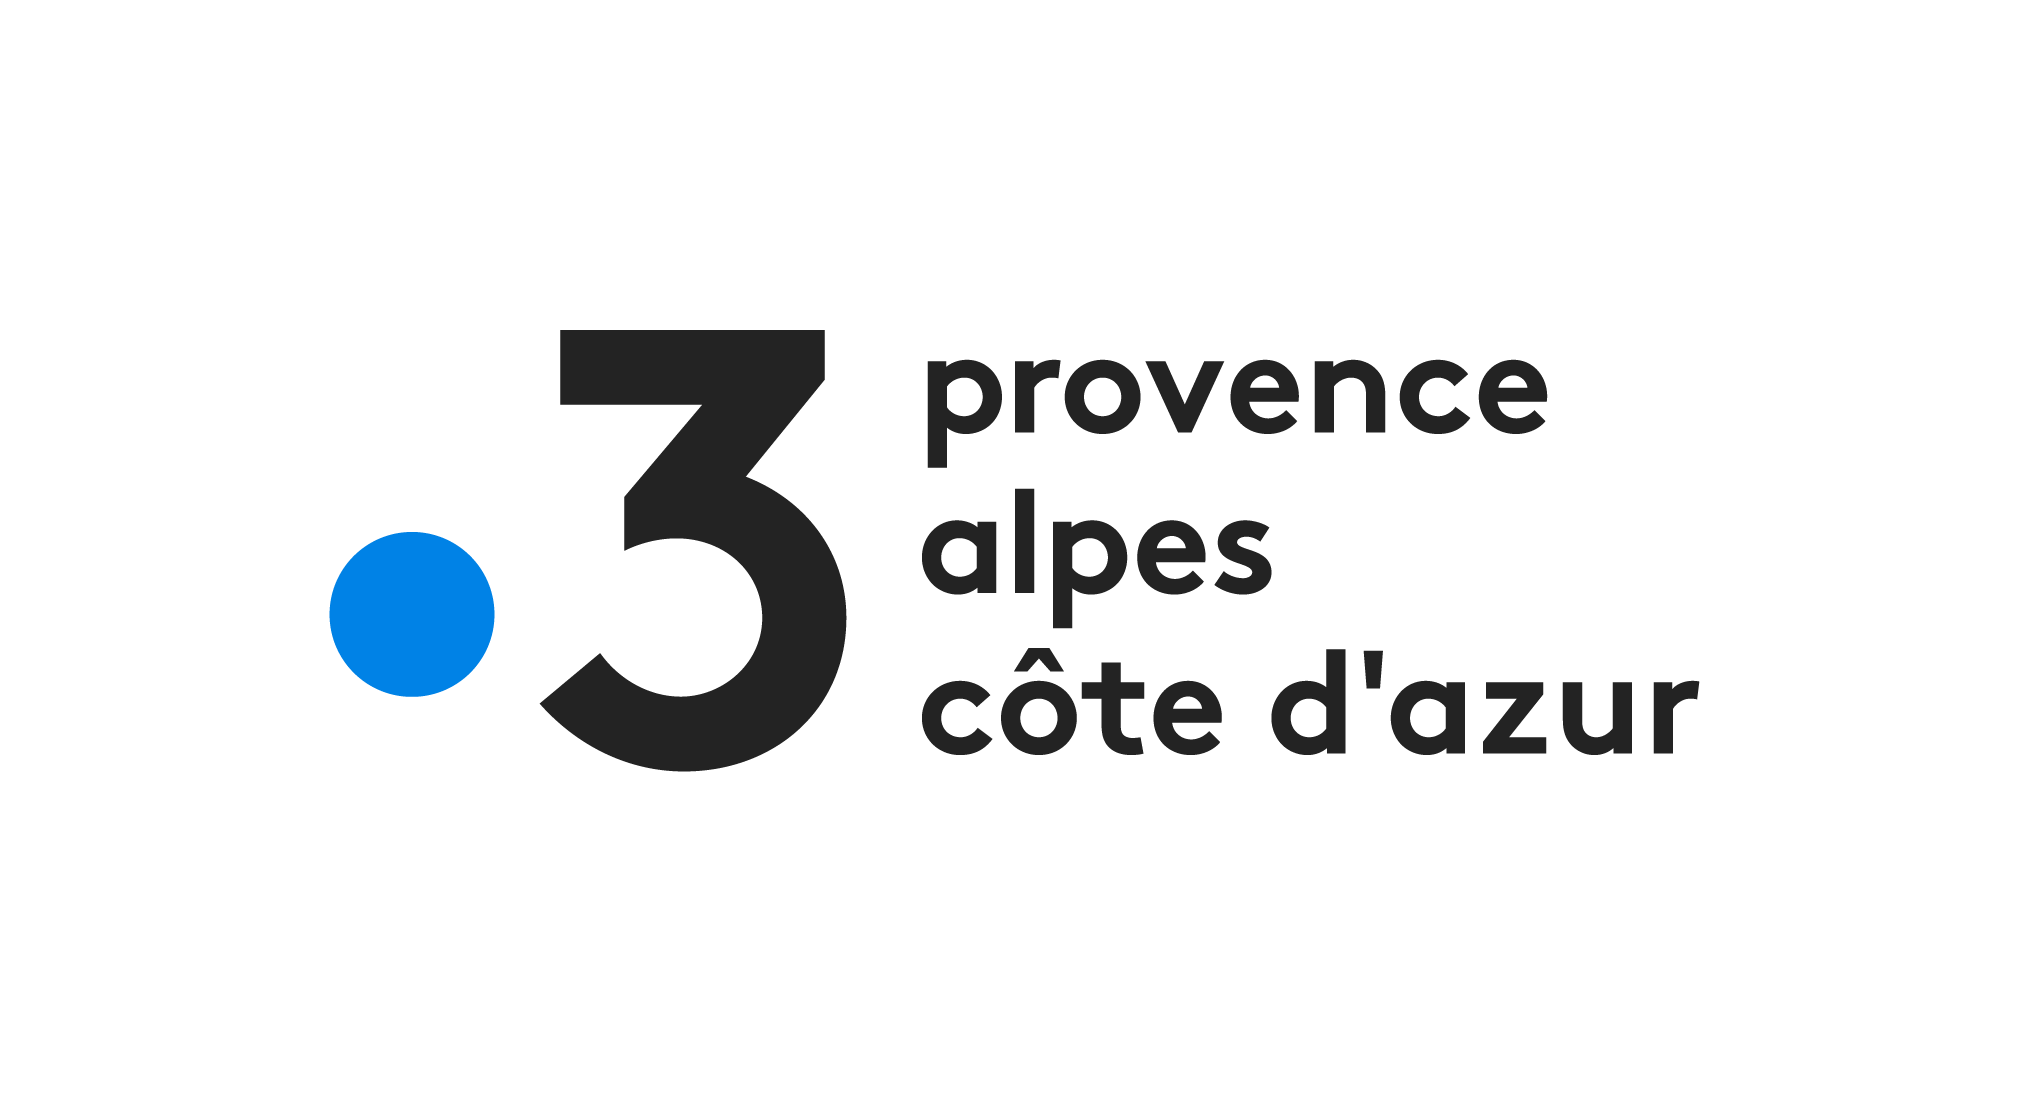 France 3 provence